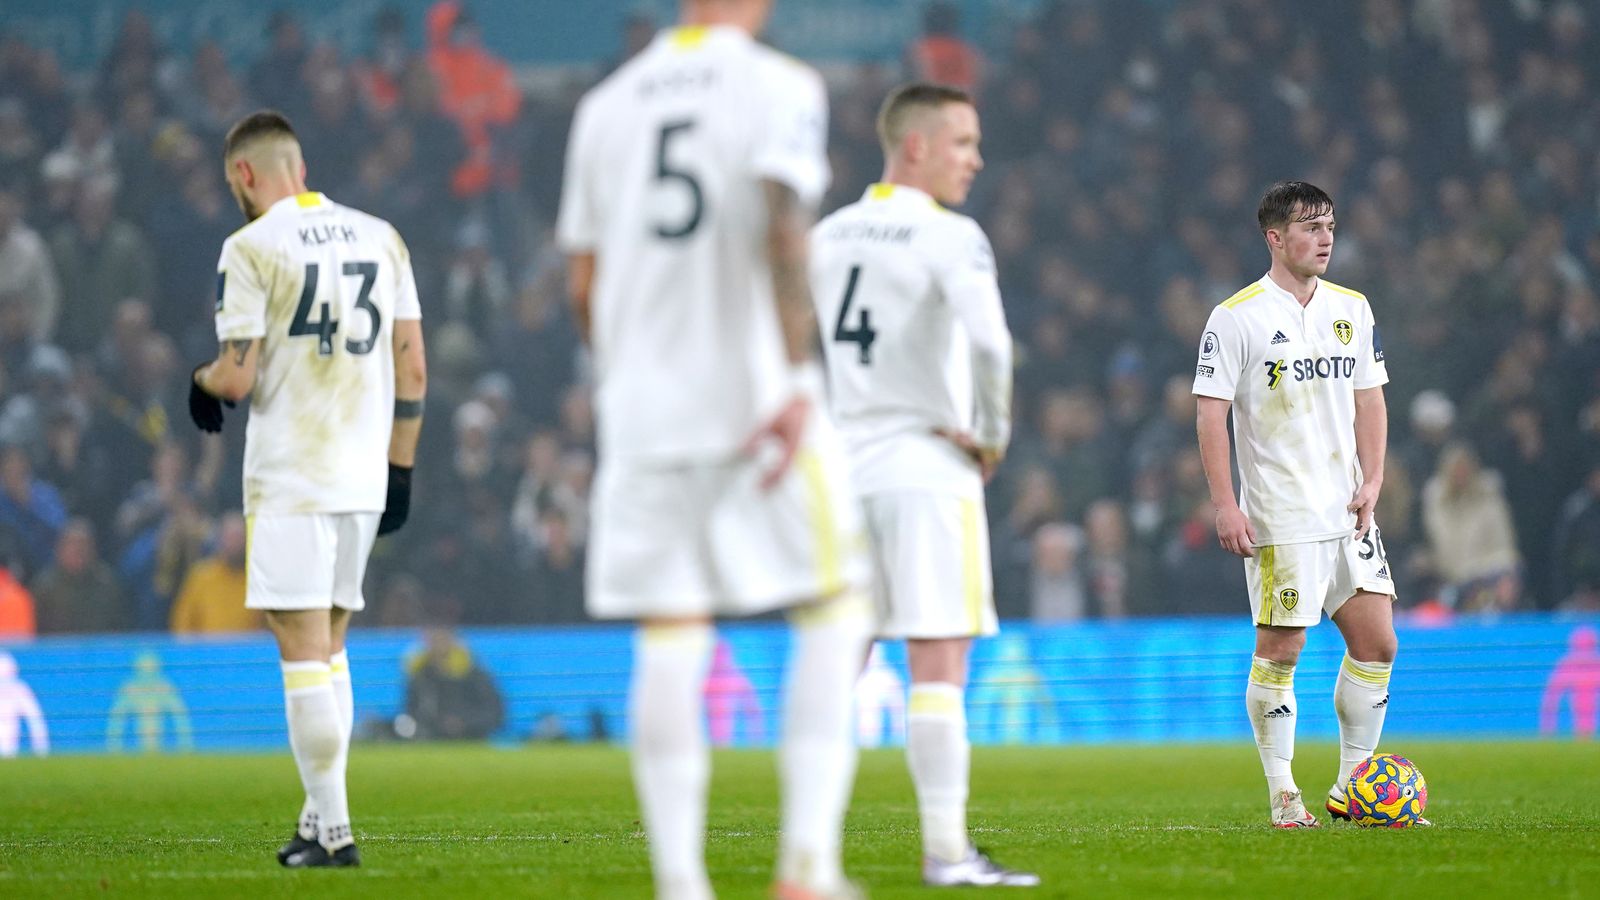 Leeds vs Aston Villa Premier League match postponed due to Covid-19 | Official statements